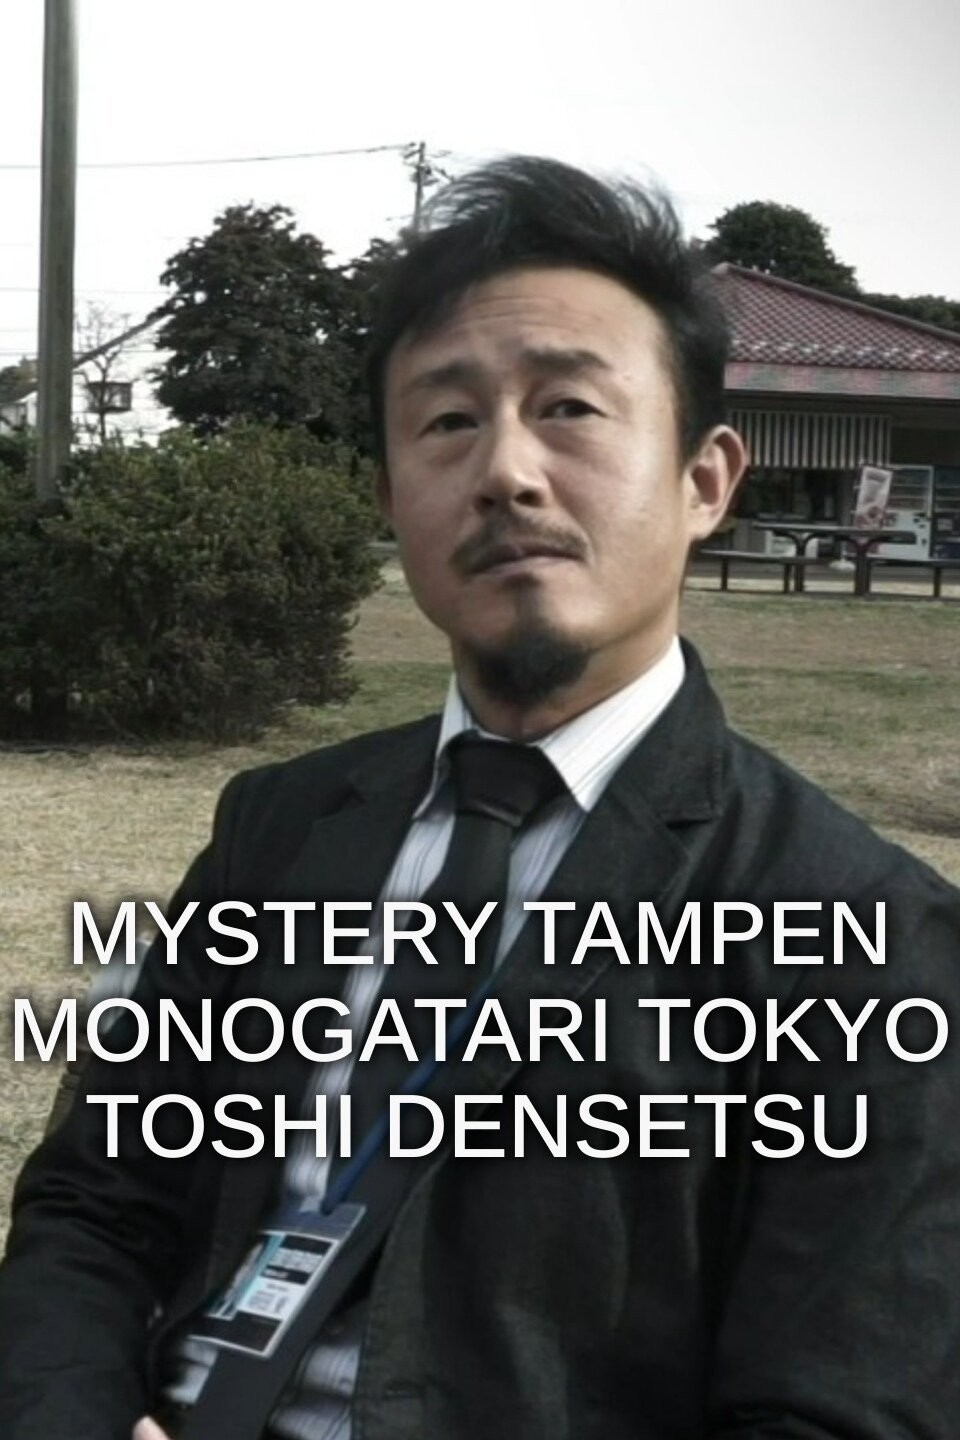 Mystery Tampen Monogatari Tokyo Toshi Densetsu Pictures | Rotten Tomatoes